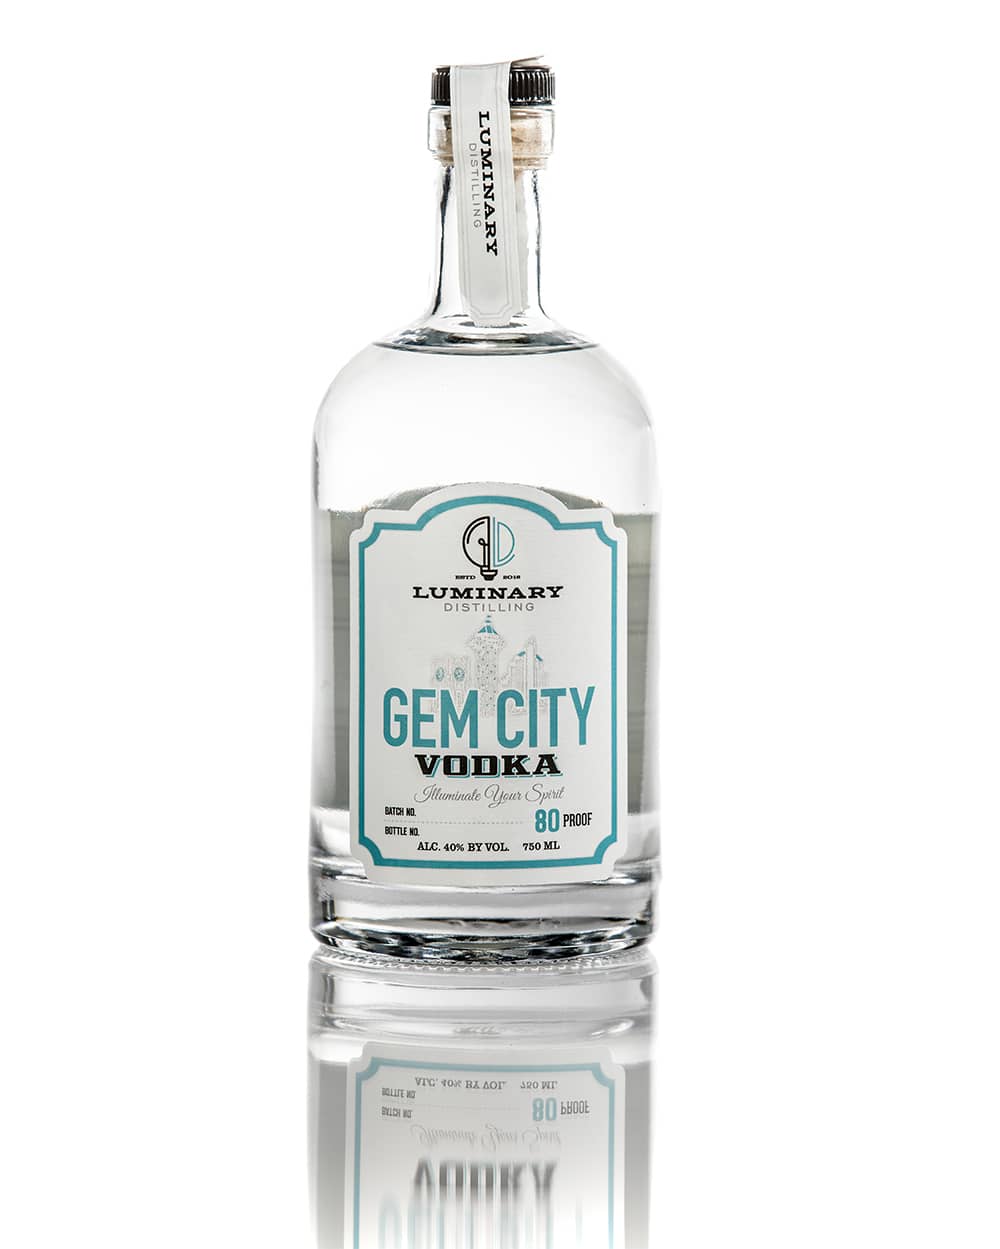 Gem City Wheat Vodka on White